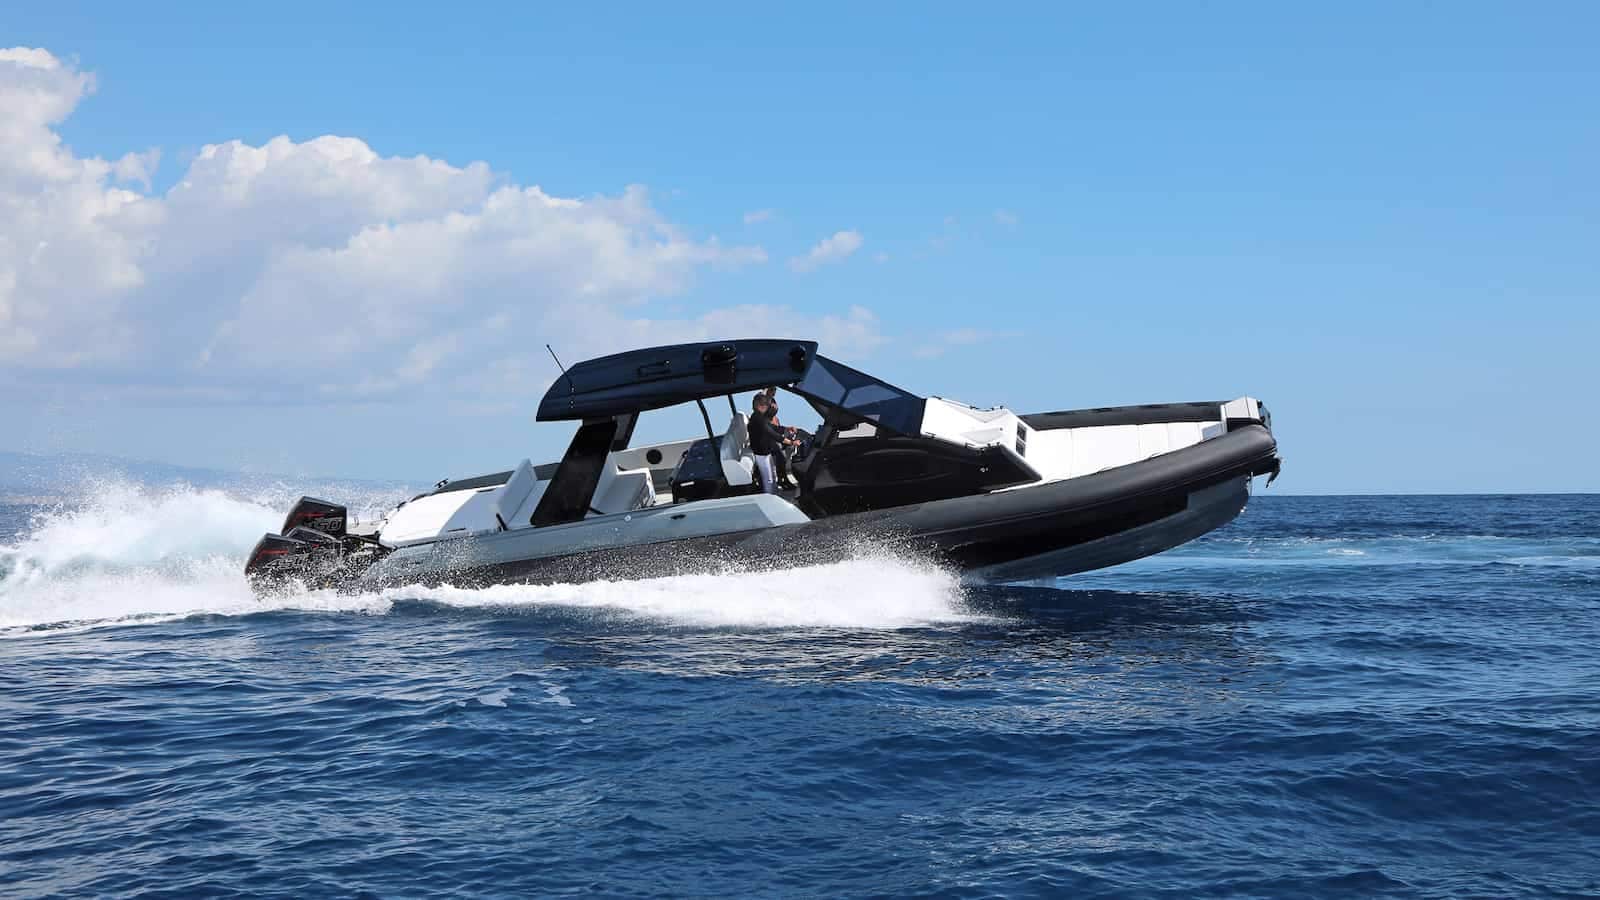 Cayman 45.0 Cruiser, la nuova ammiraglia di Ranieri International verrà presentata a Genova